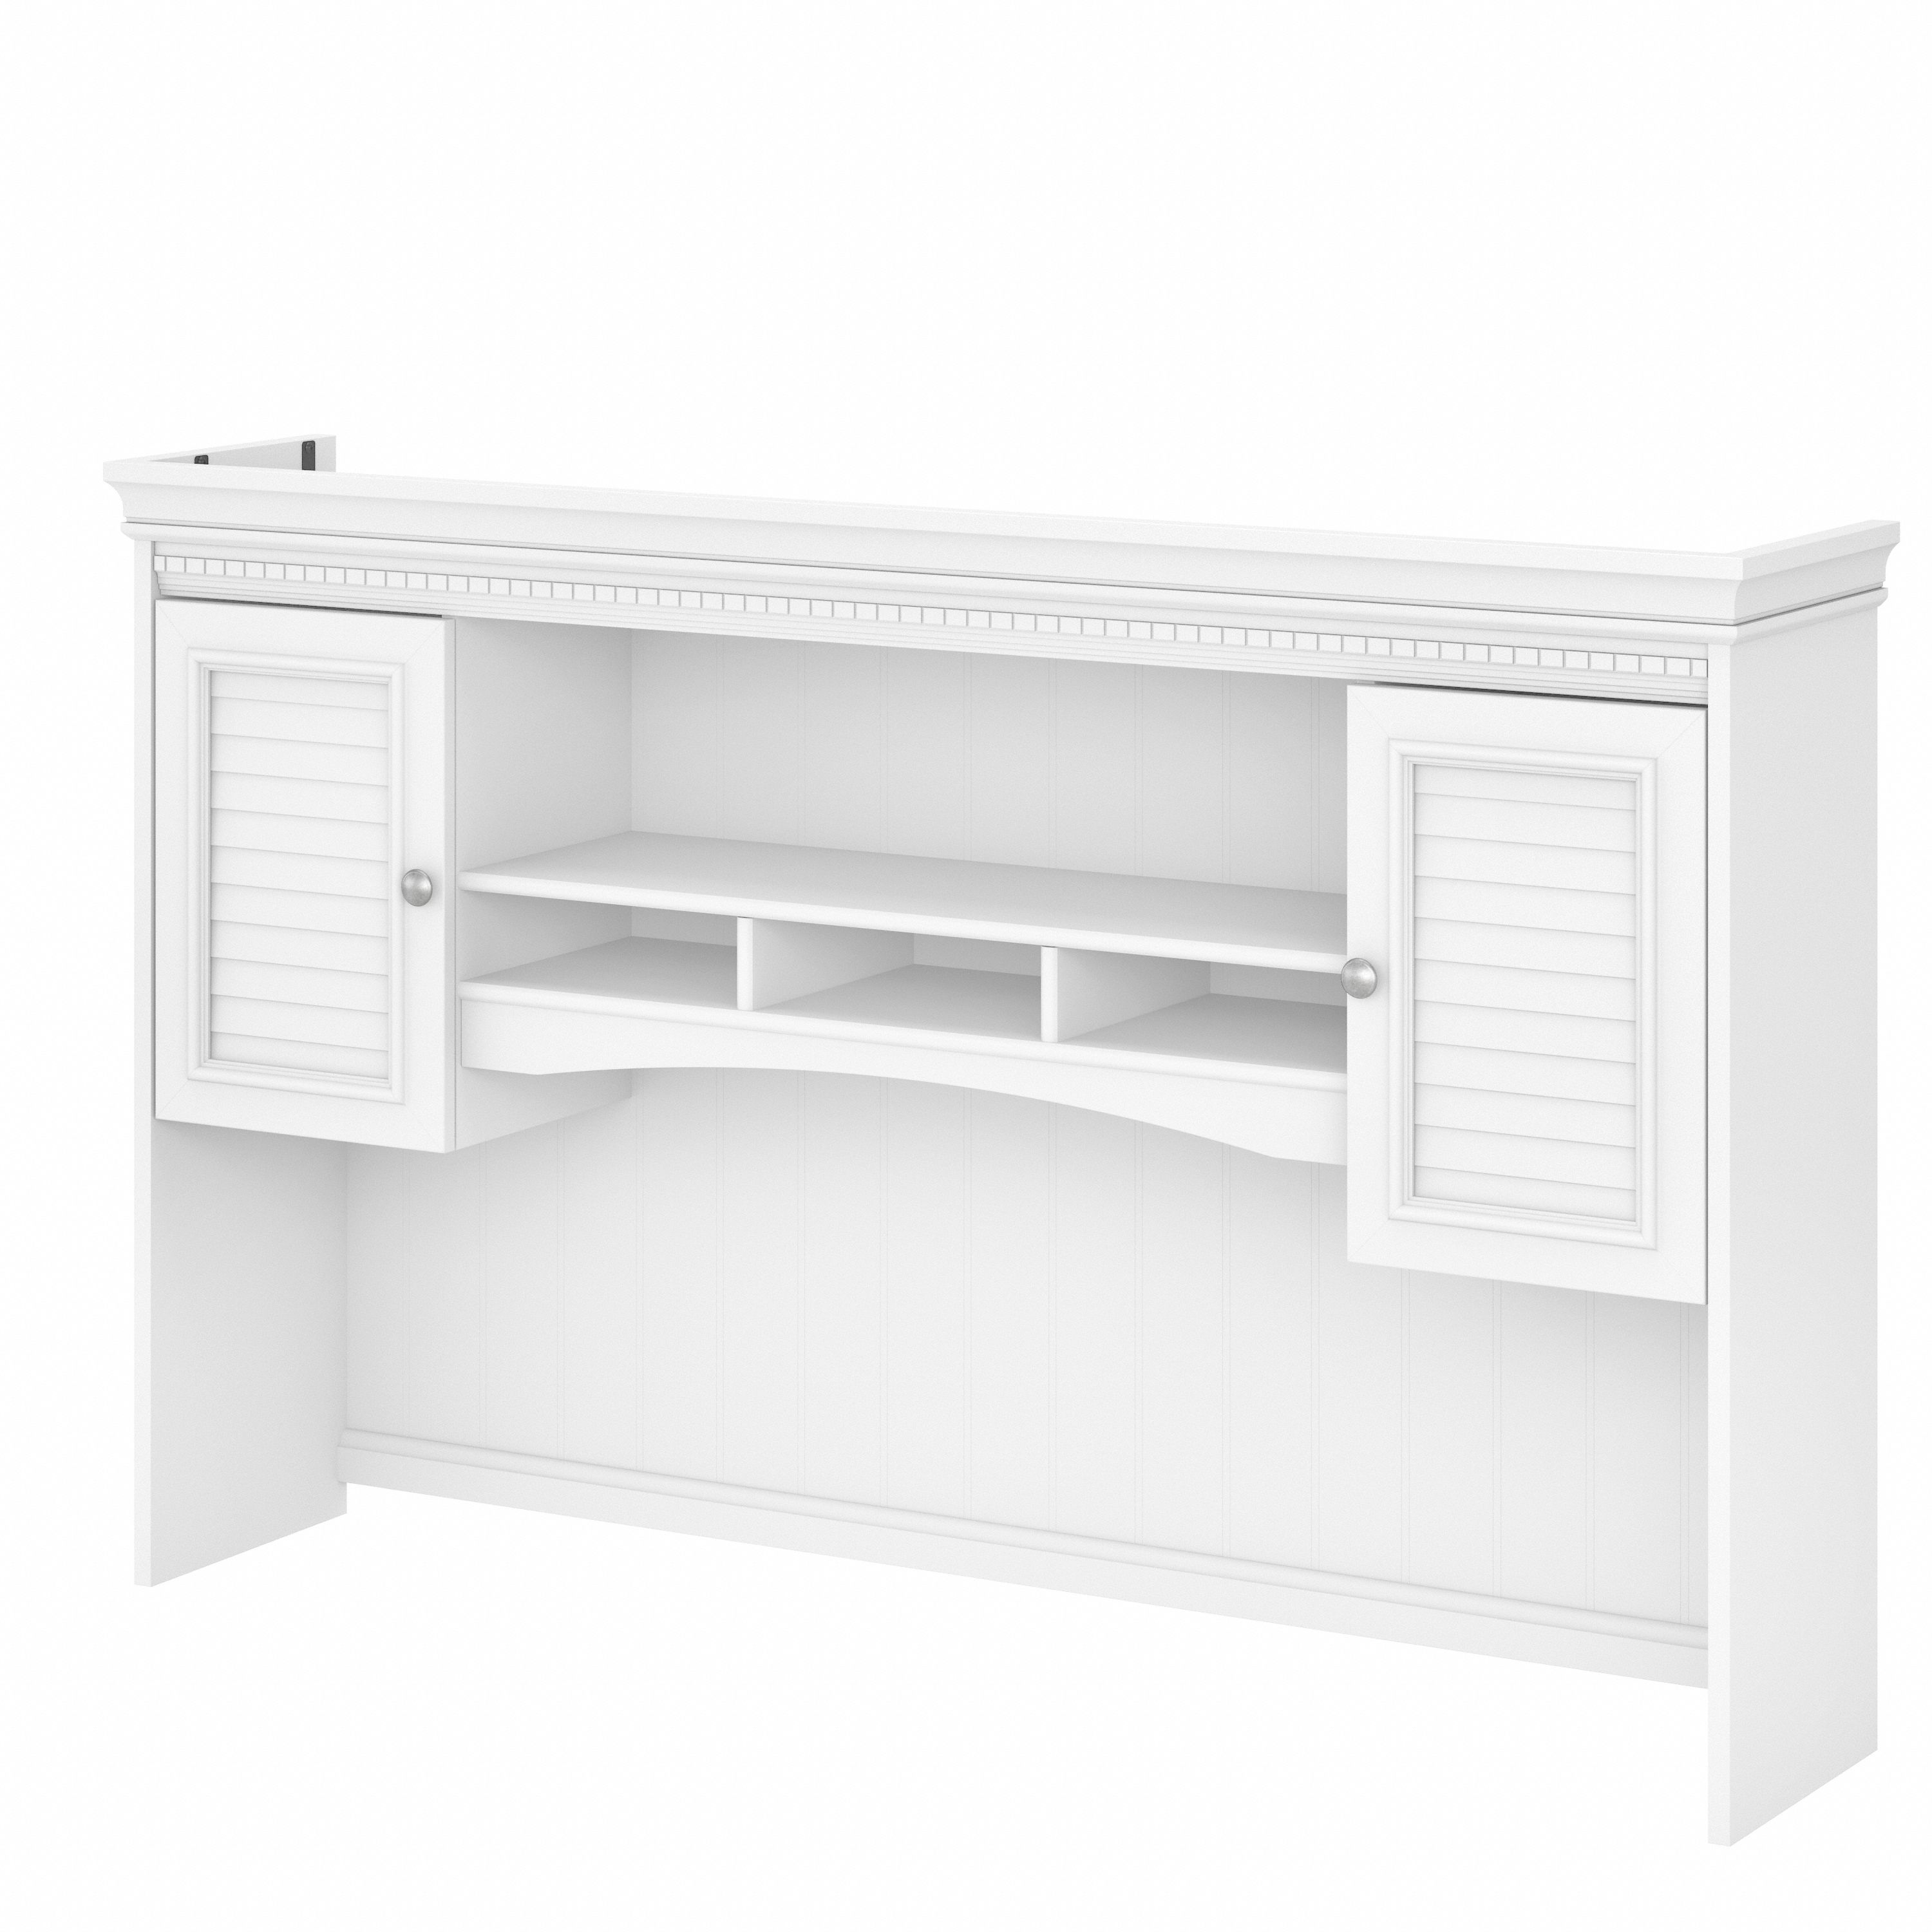 Shop Bush Furniture Fairview 60W Hutch for L Shaped Desk 02 WC53631-03 #color_shiplap gray/pure white